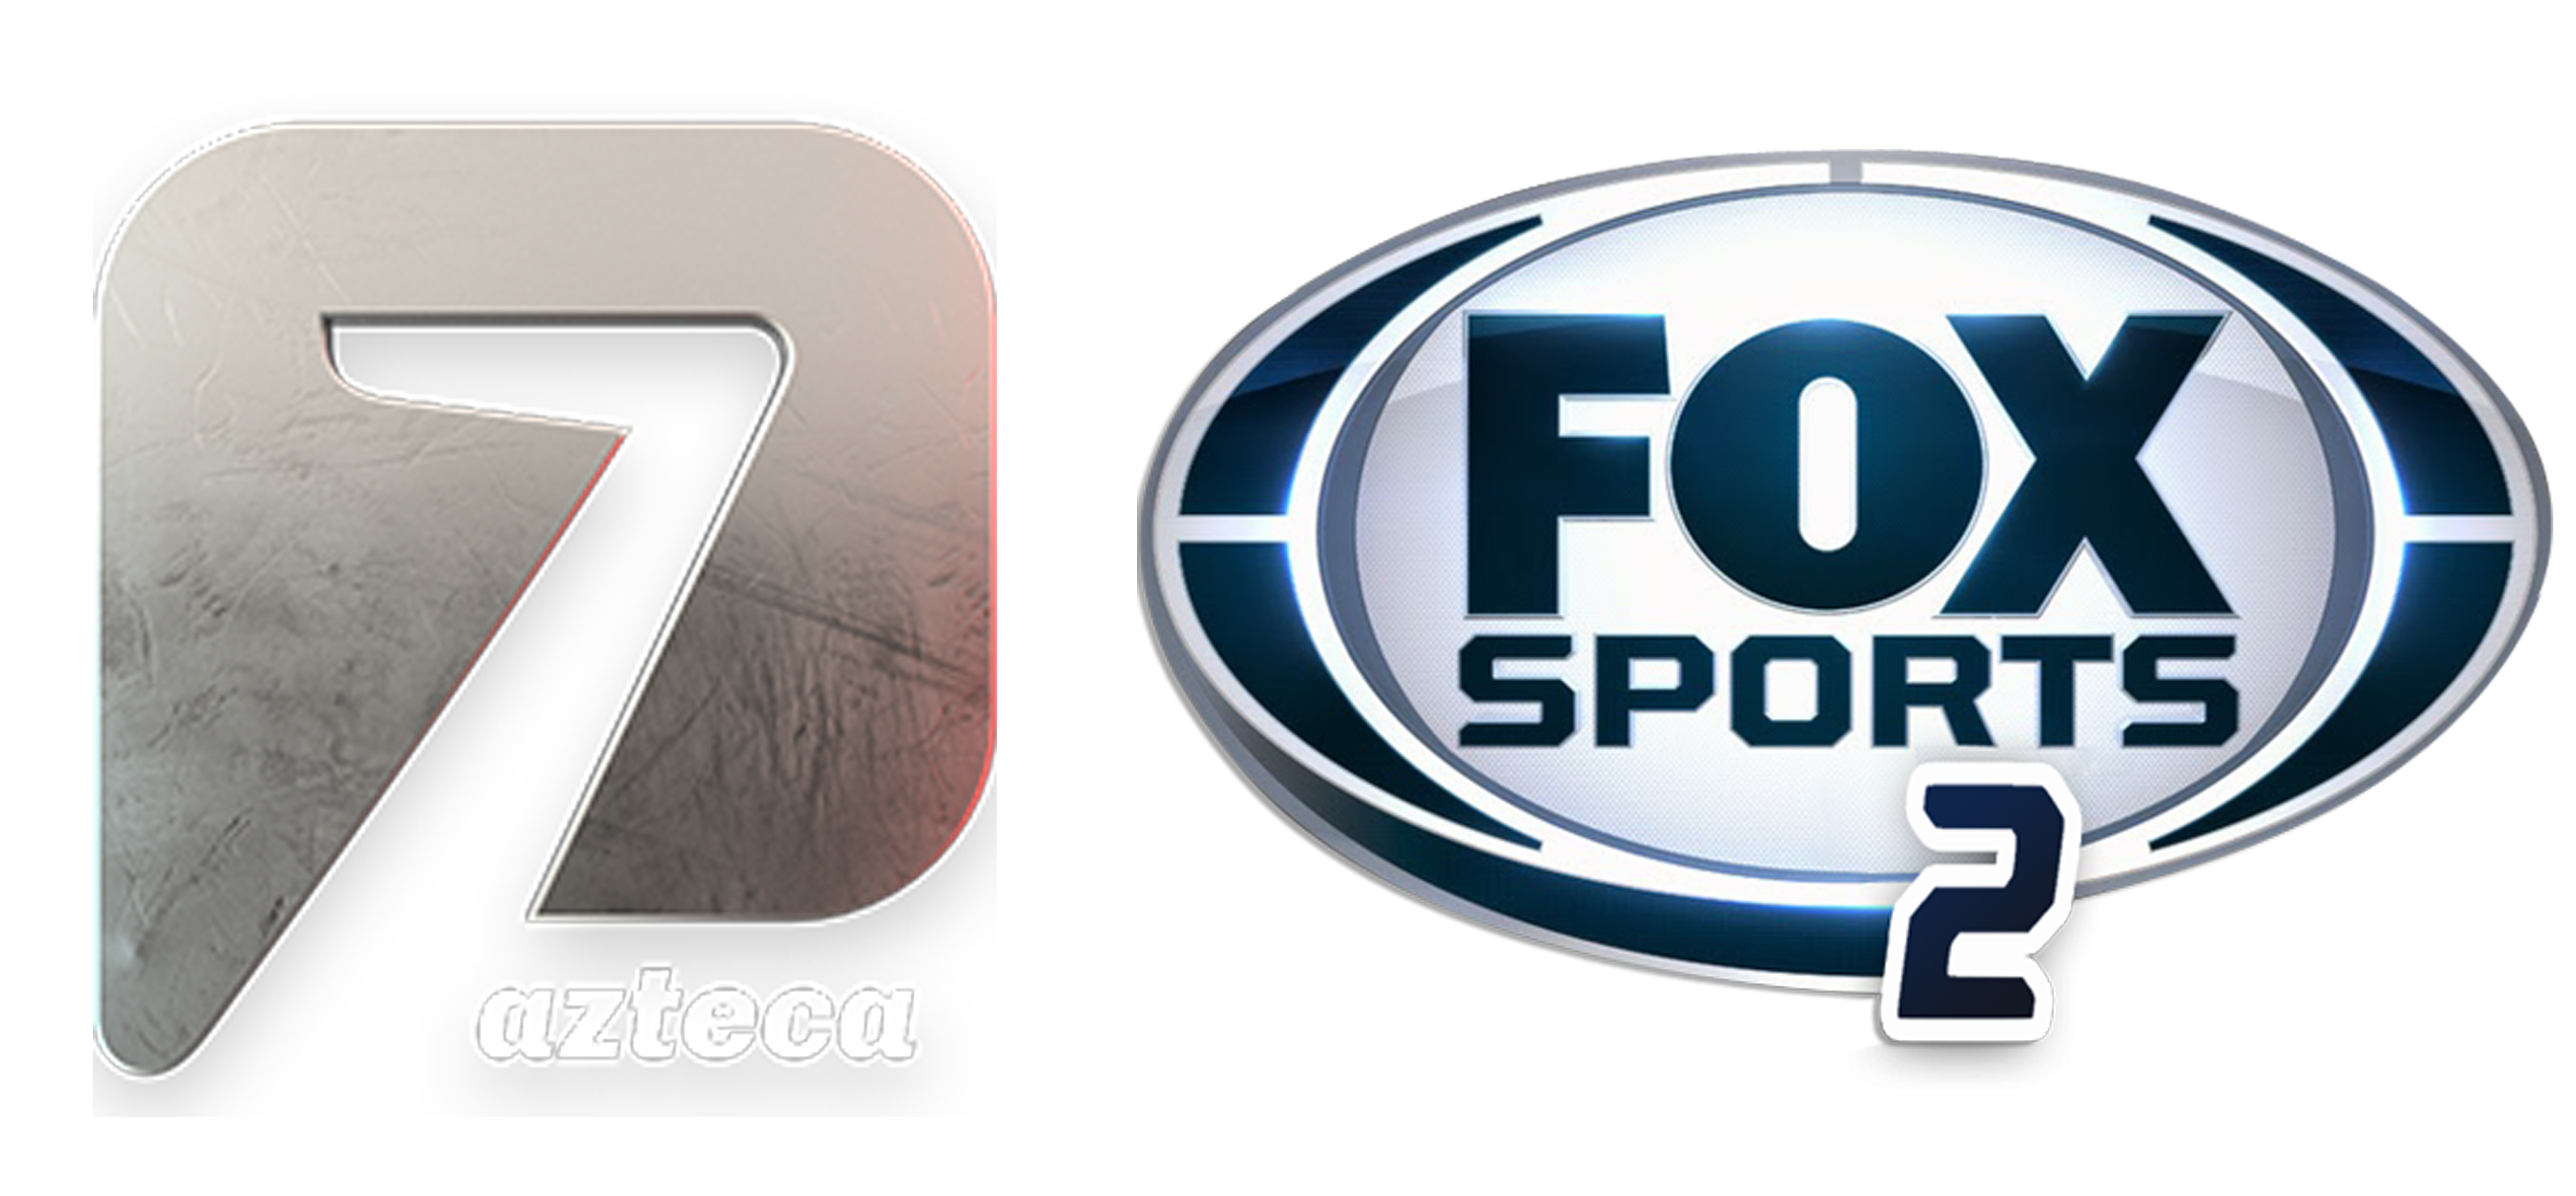 Azteca 7 | Fox Sports 2